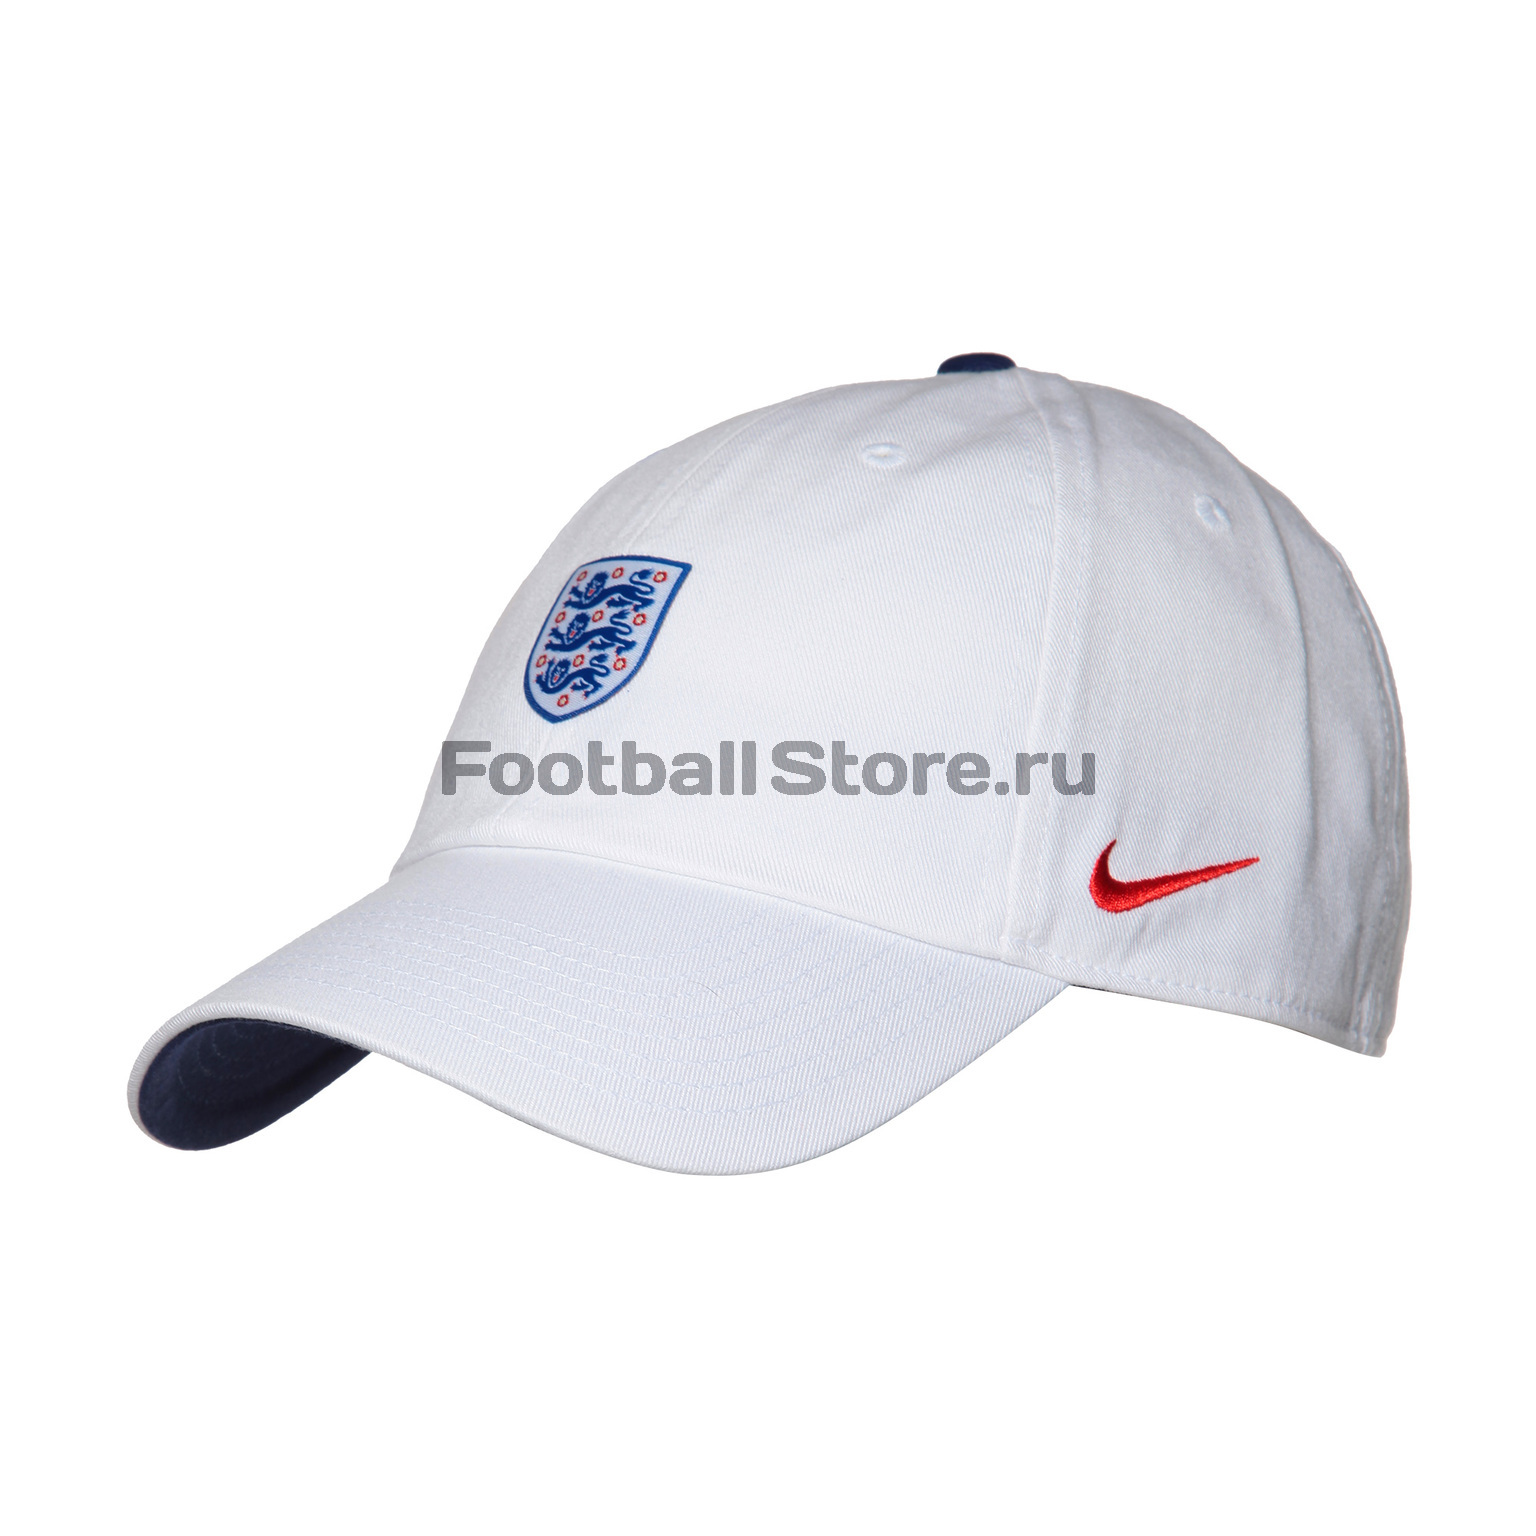 Бейсболка Nike England Cap 881712-101